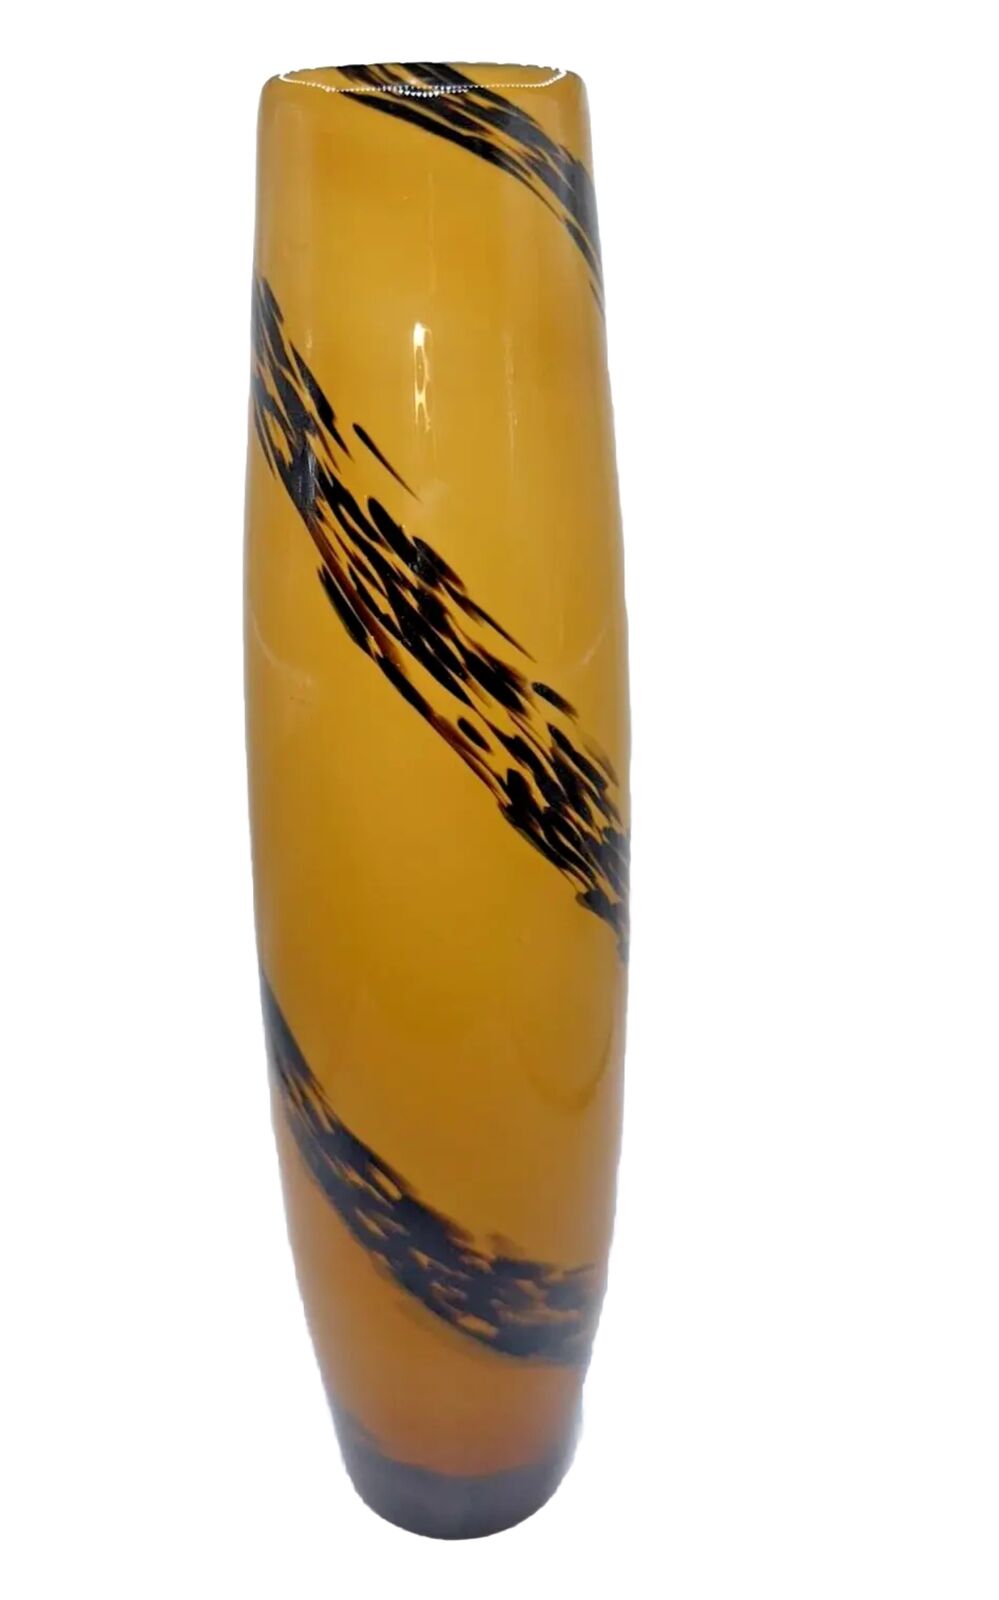 12” Golden amber Vase With Diagonal Stripes, Beautiful Wild Theme, Unmarked